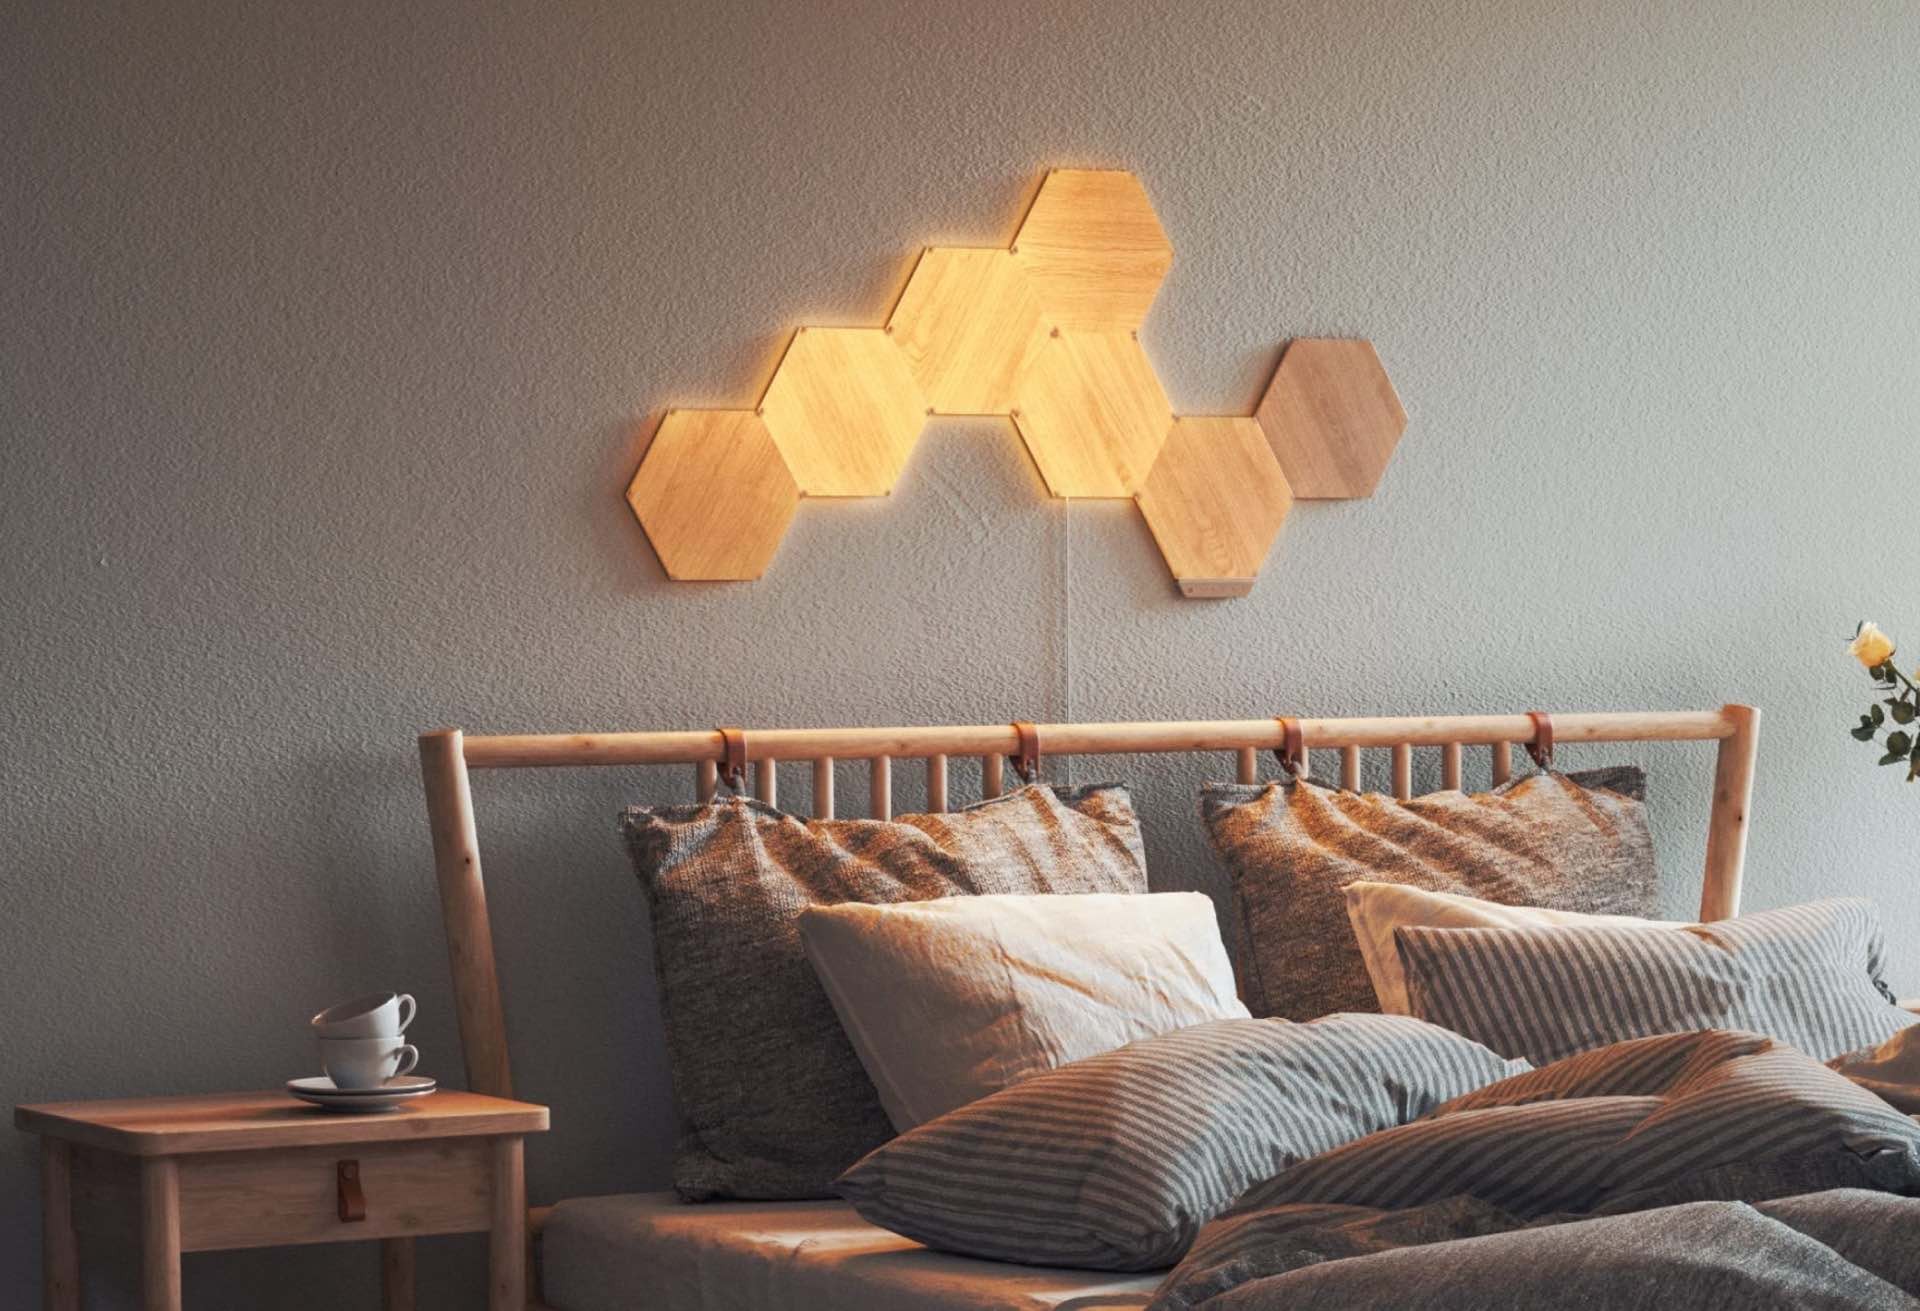 Nanoleaf Elements “Wood Look” Smart Light Panels